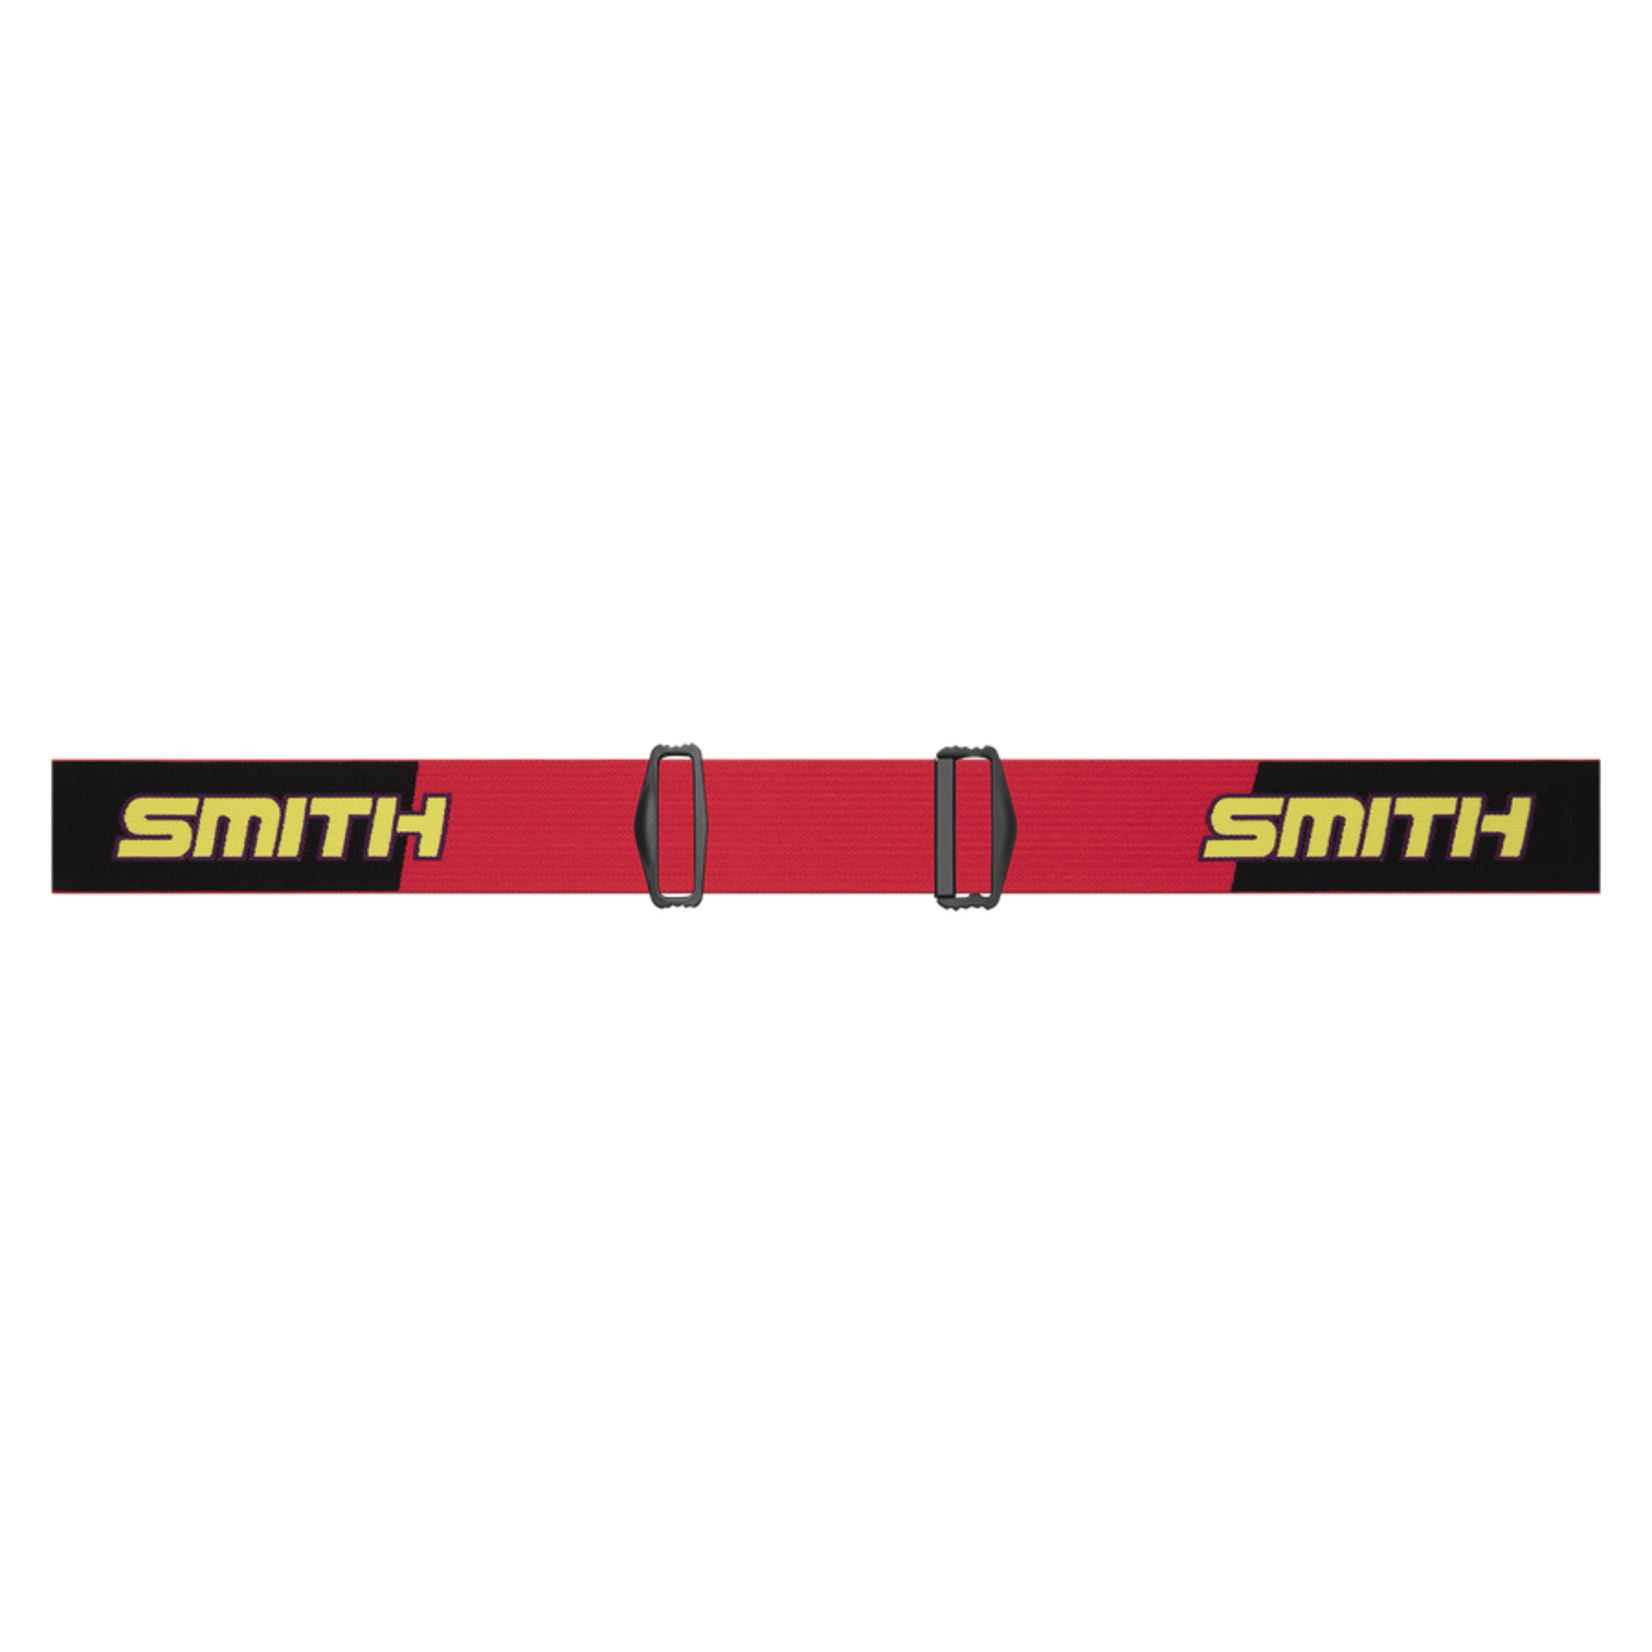 SMITH OPTICS SQUAD MTB XL